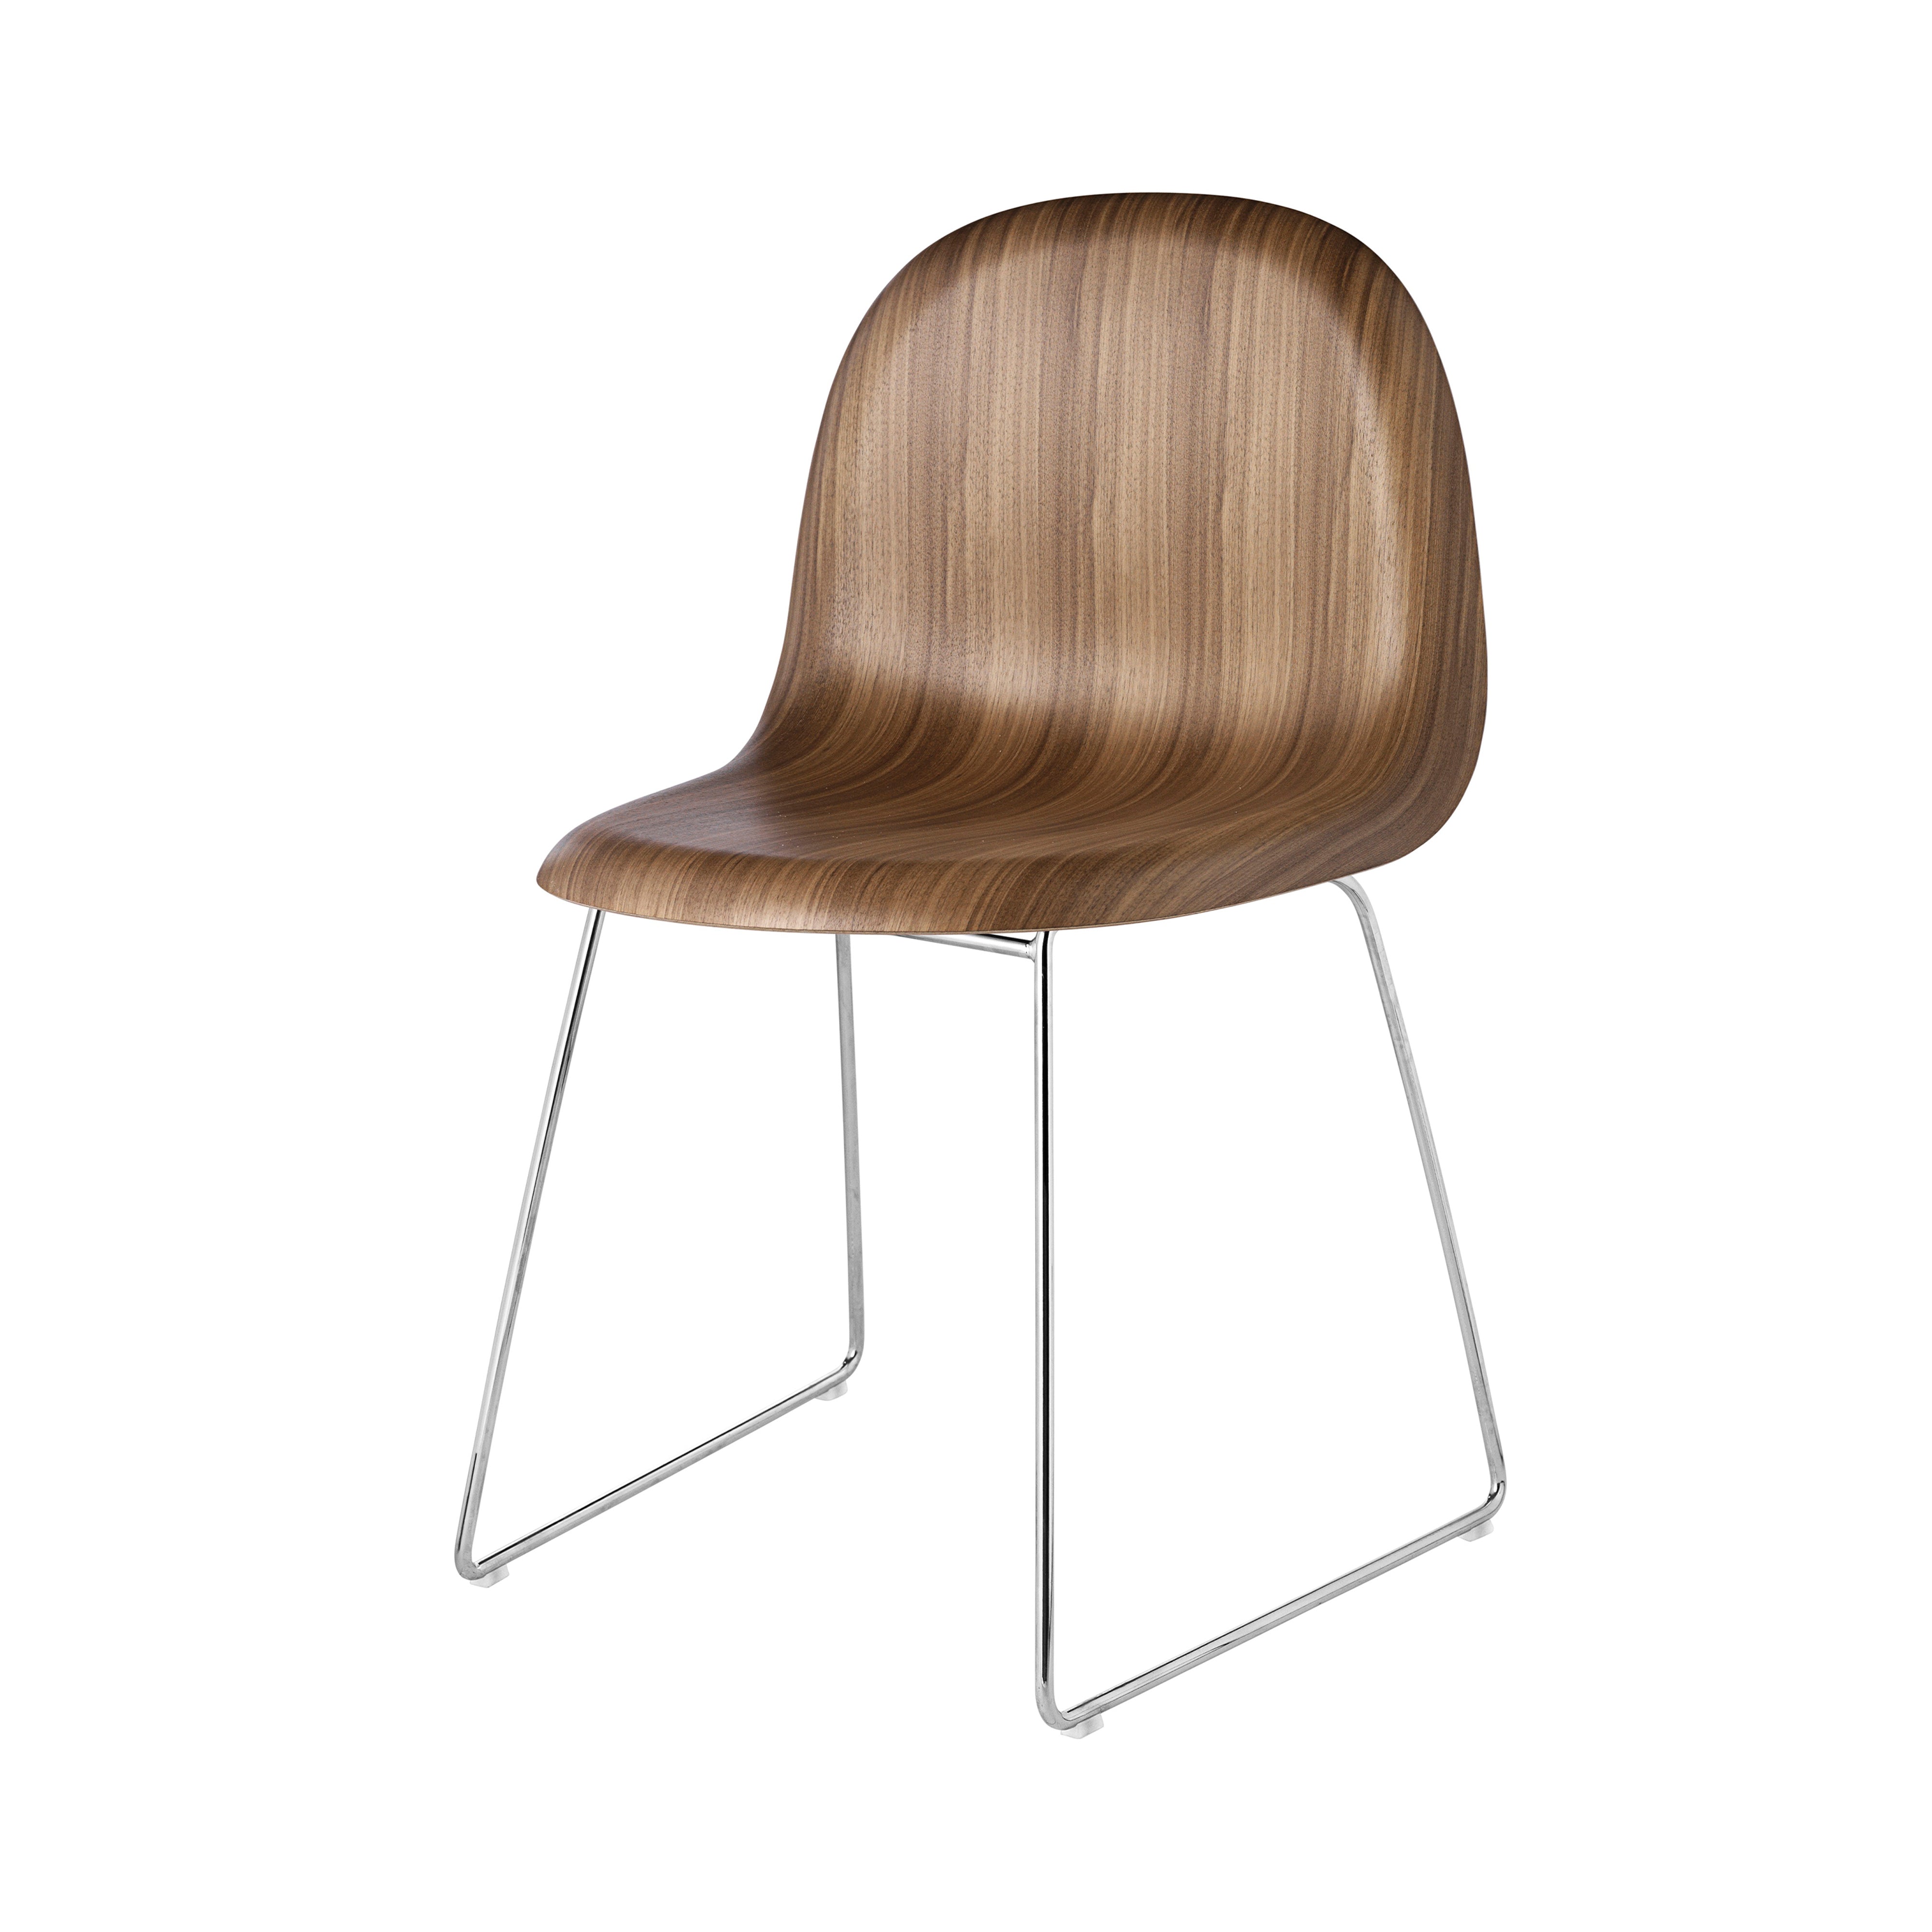 3D Dining Chair: Sledge Base + American Walnut + Chrome